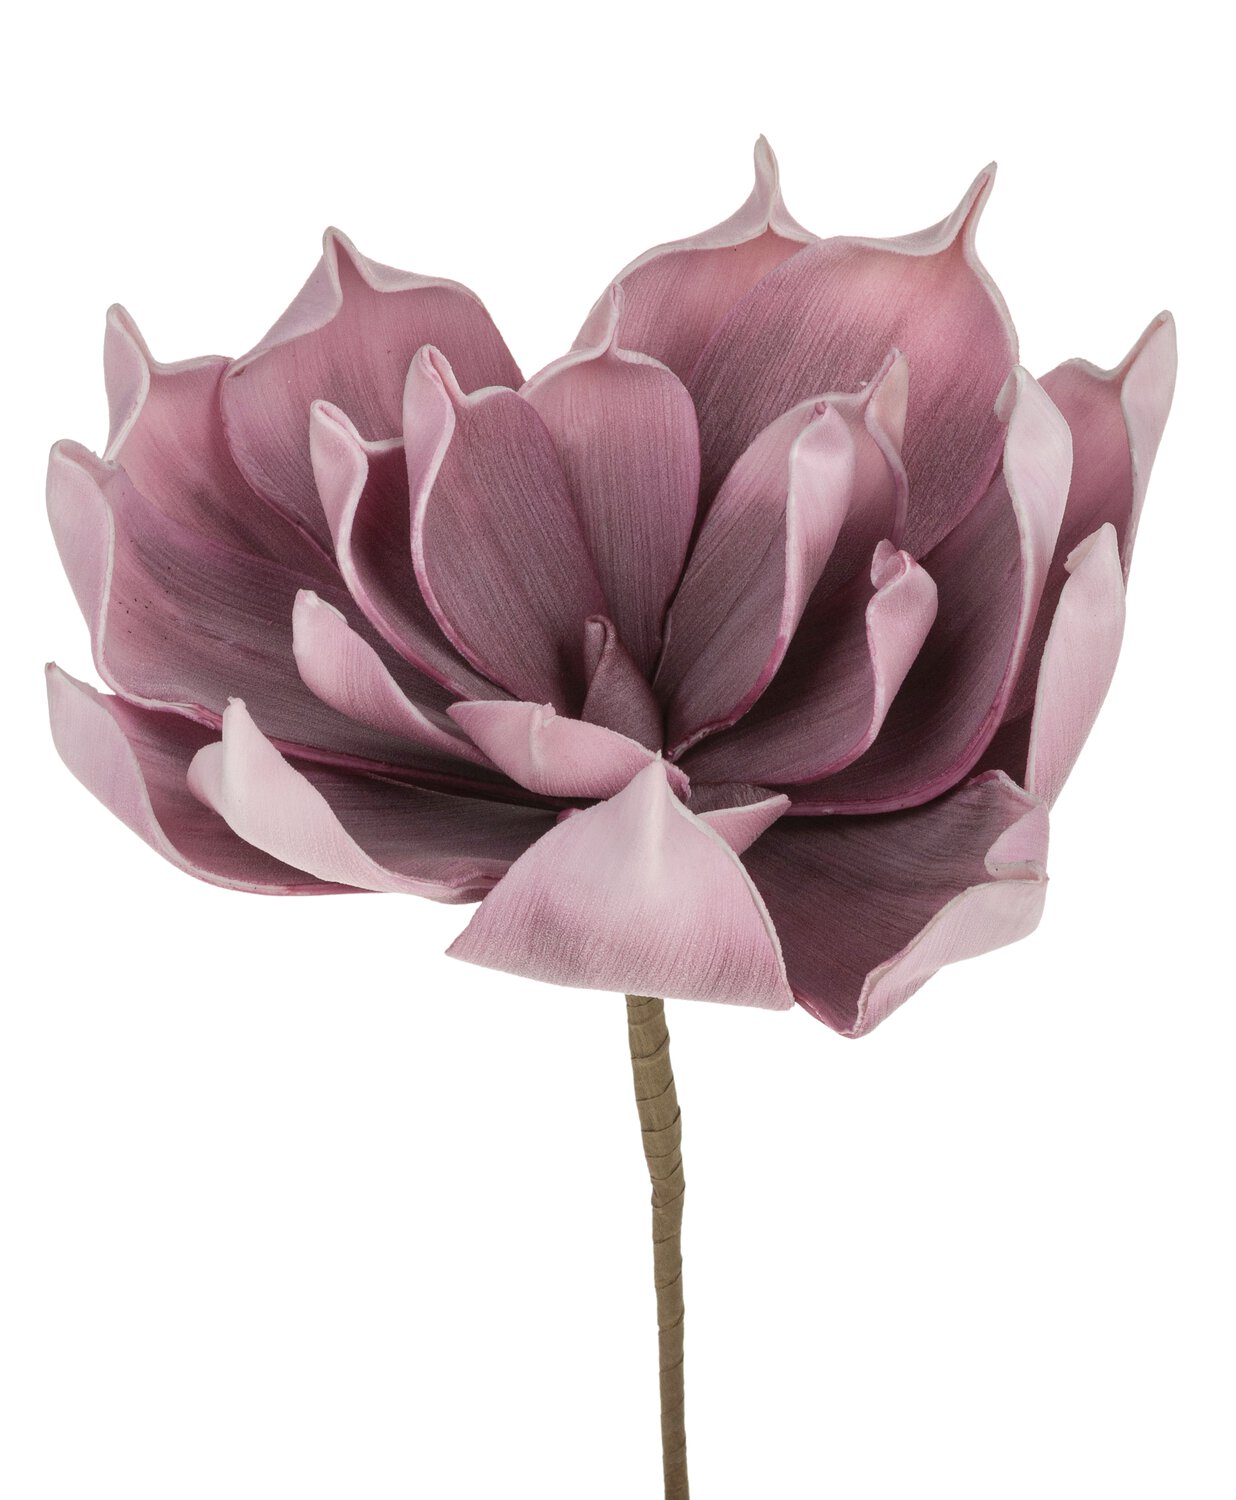 Deko Soft flower 'Aloe', 30 cm, antik-rosa